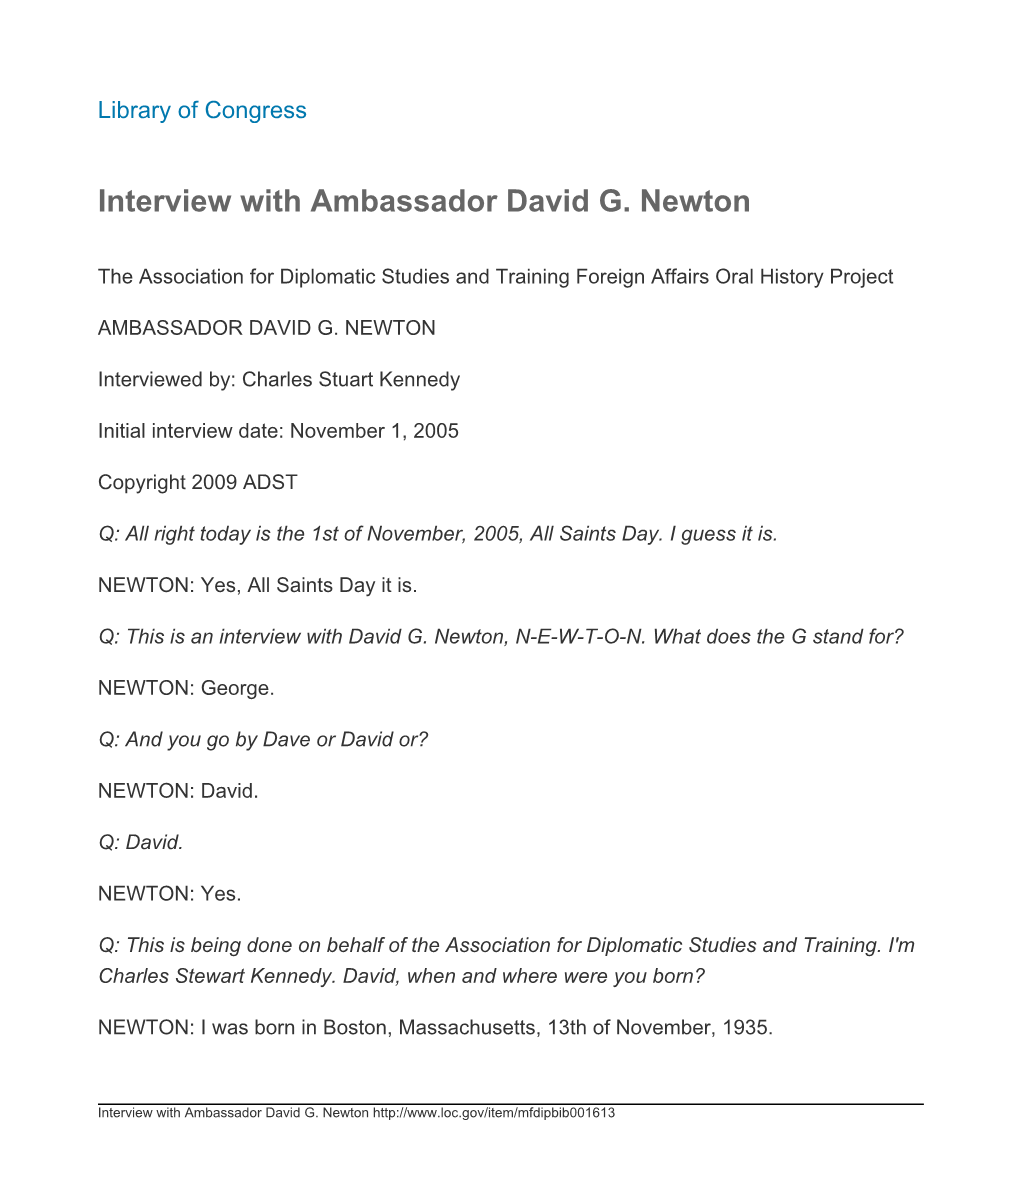 Interview with Ambassador David G. Newton